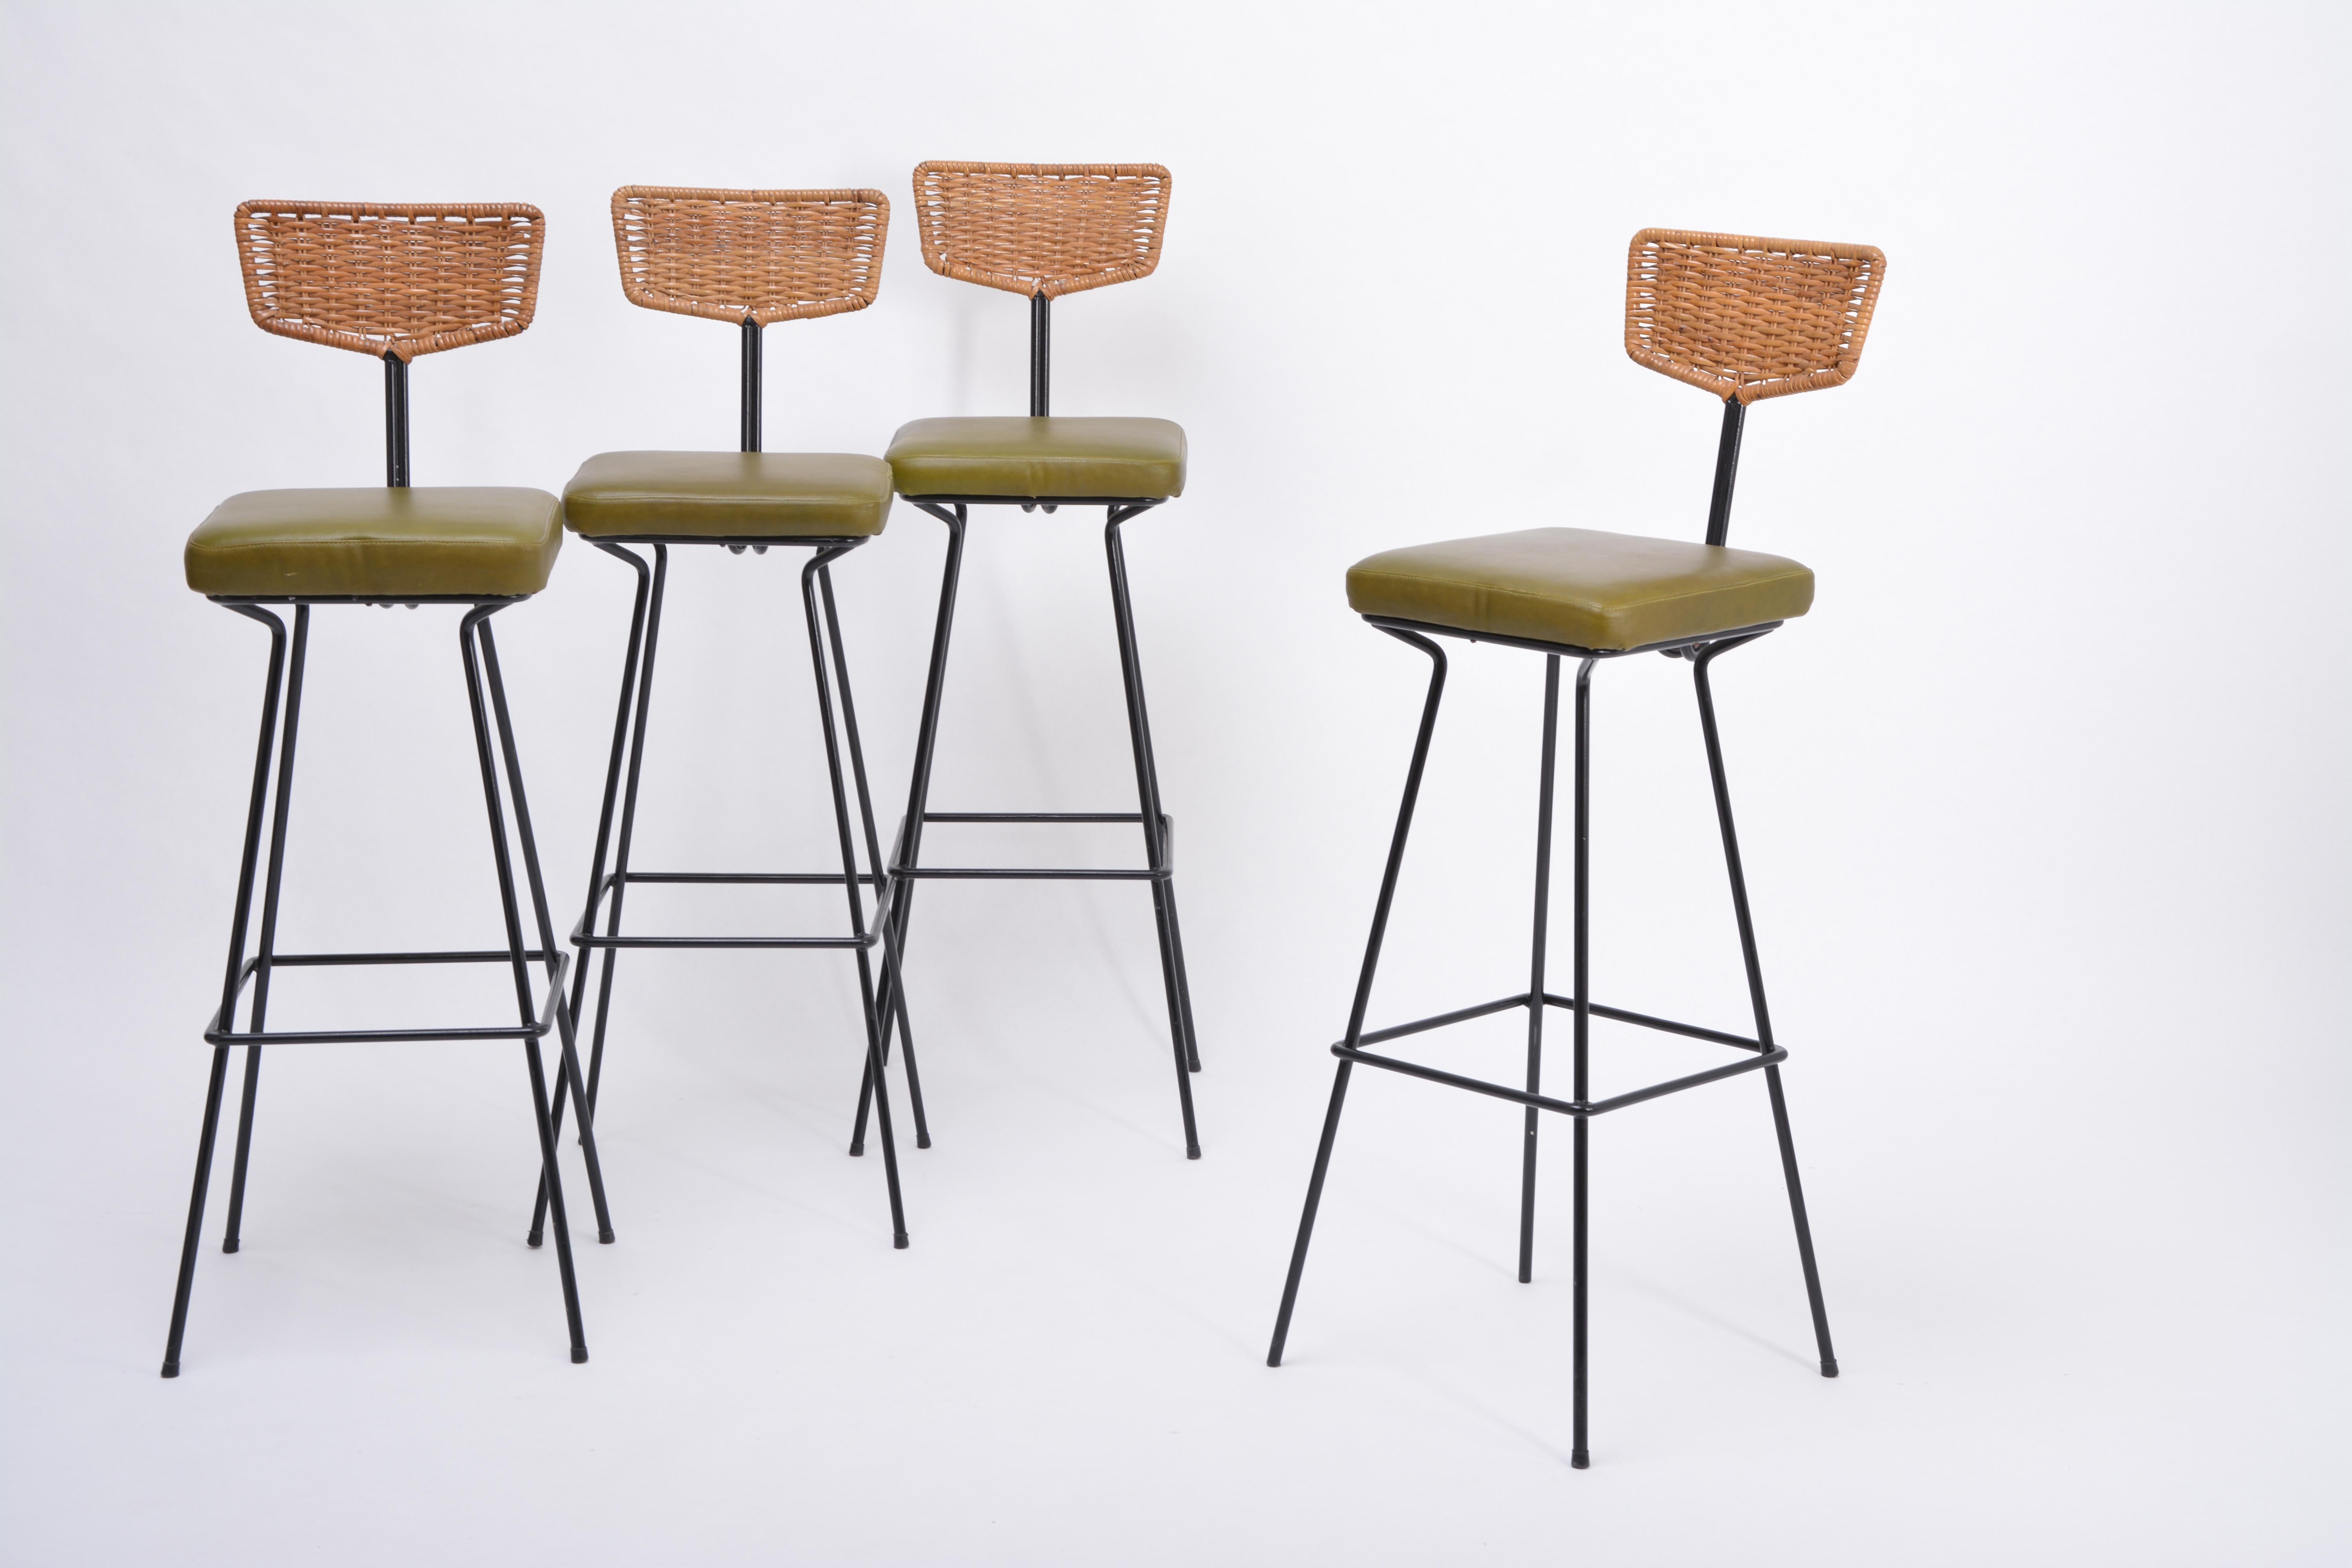 German Set of four Mid-Century Modern wicker bar stools by Herta Maria Witzemann